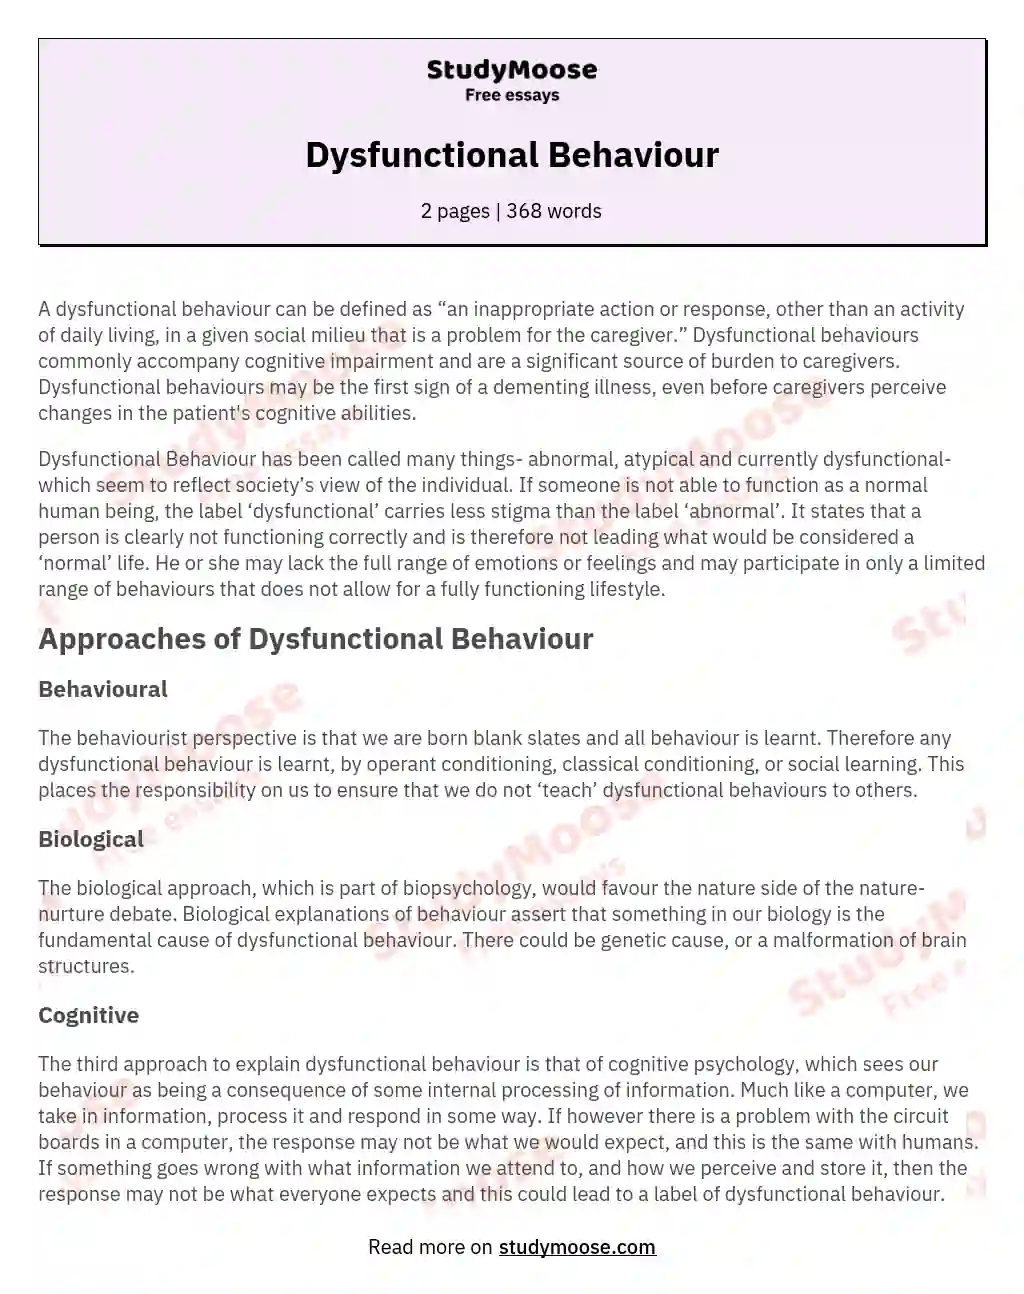 Dysfunctional Behaviour essay